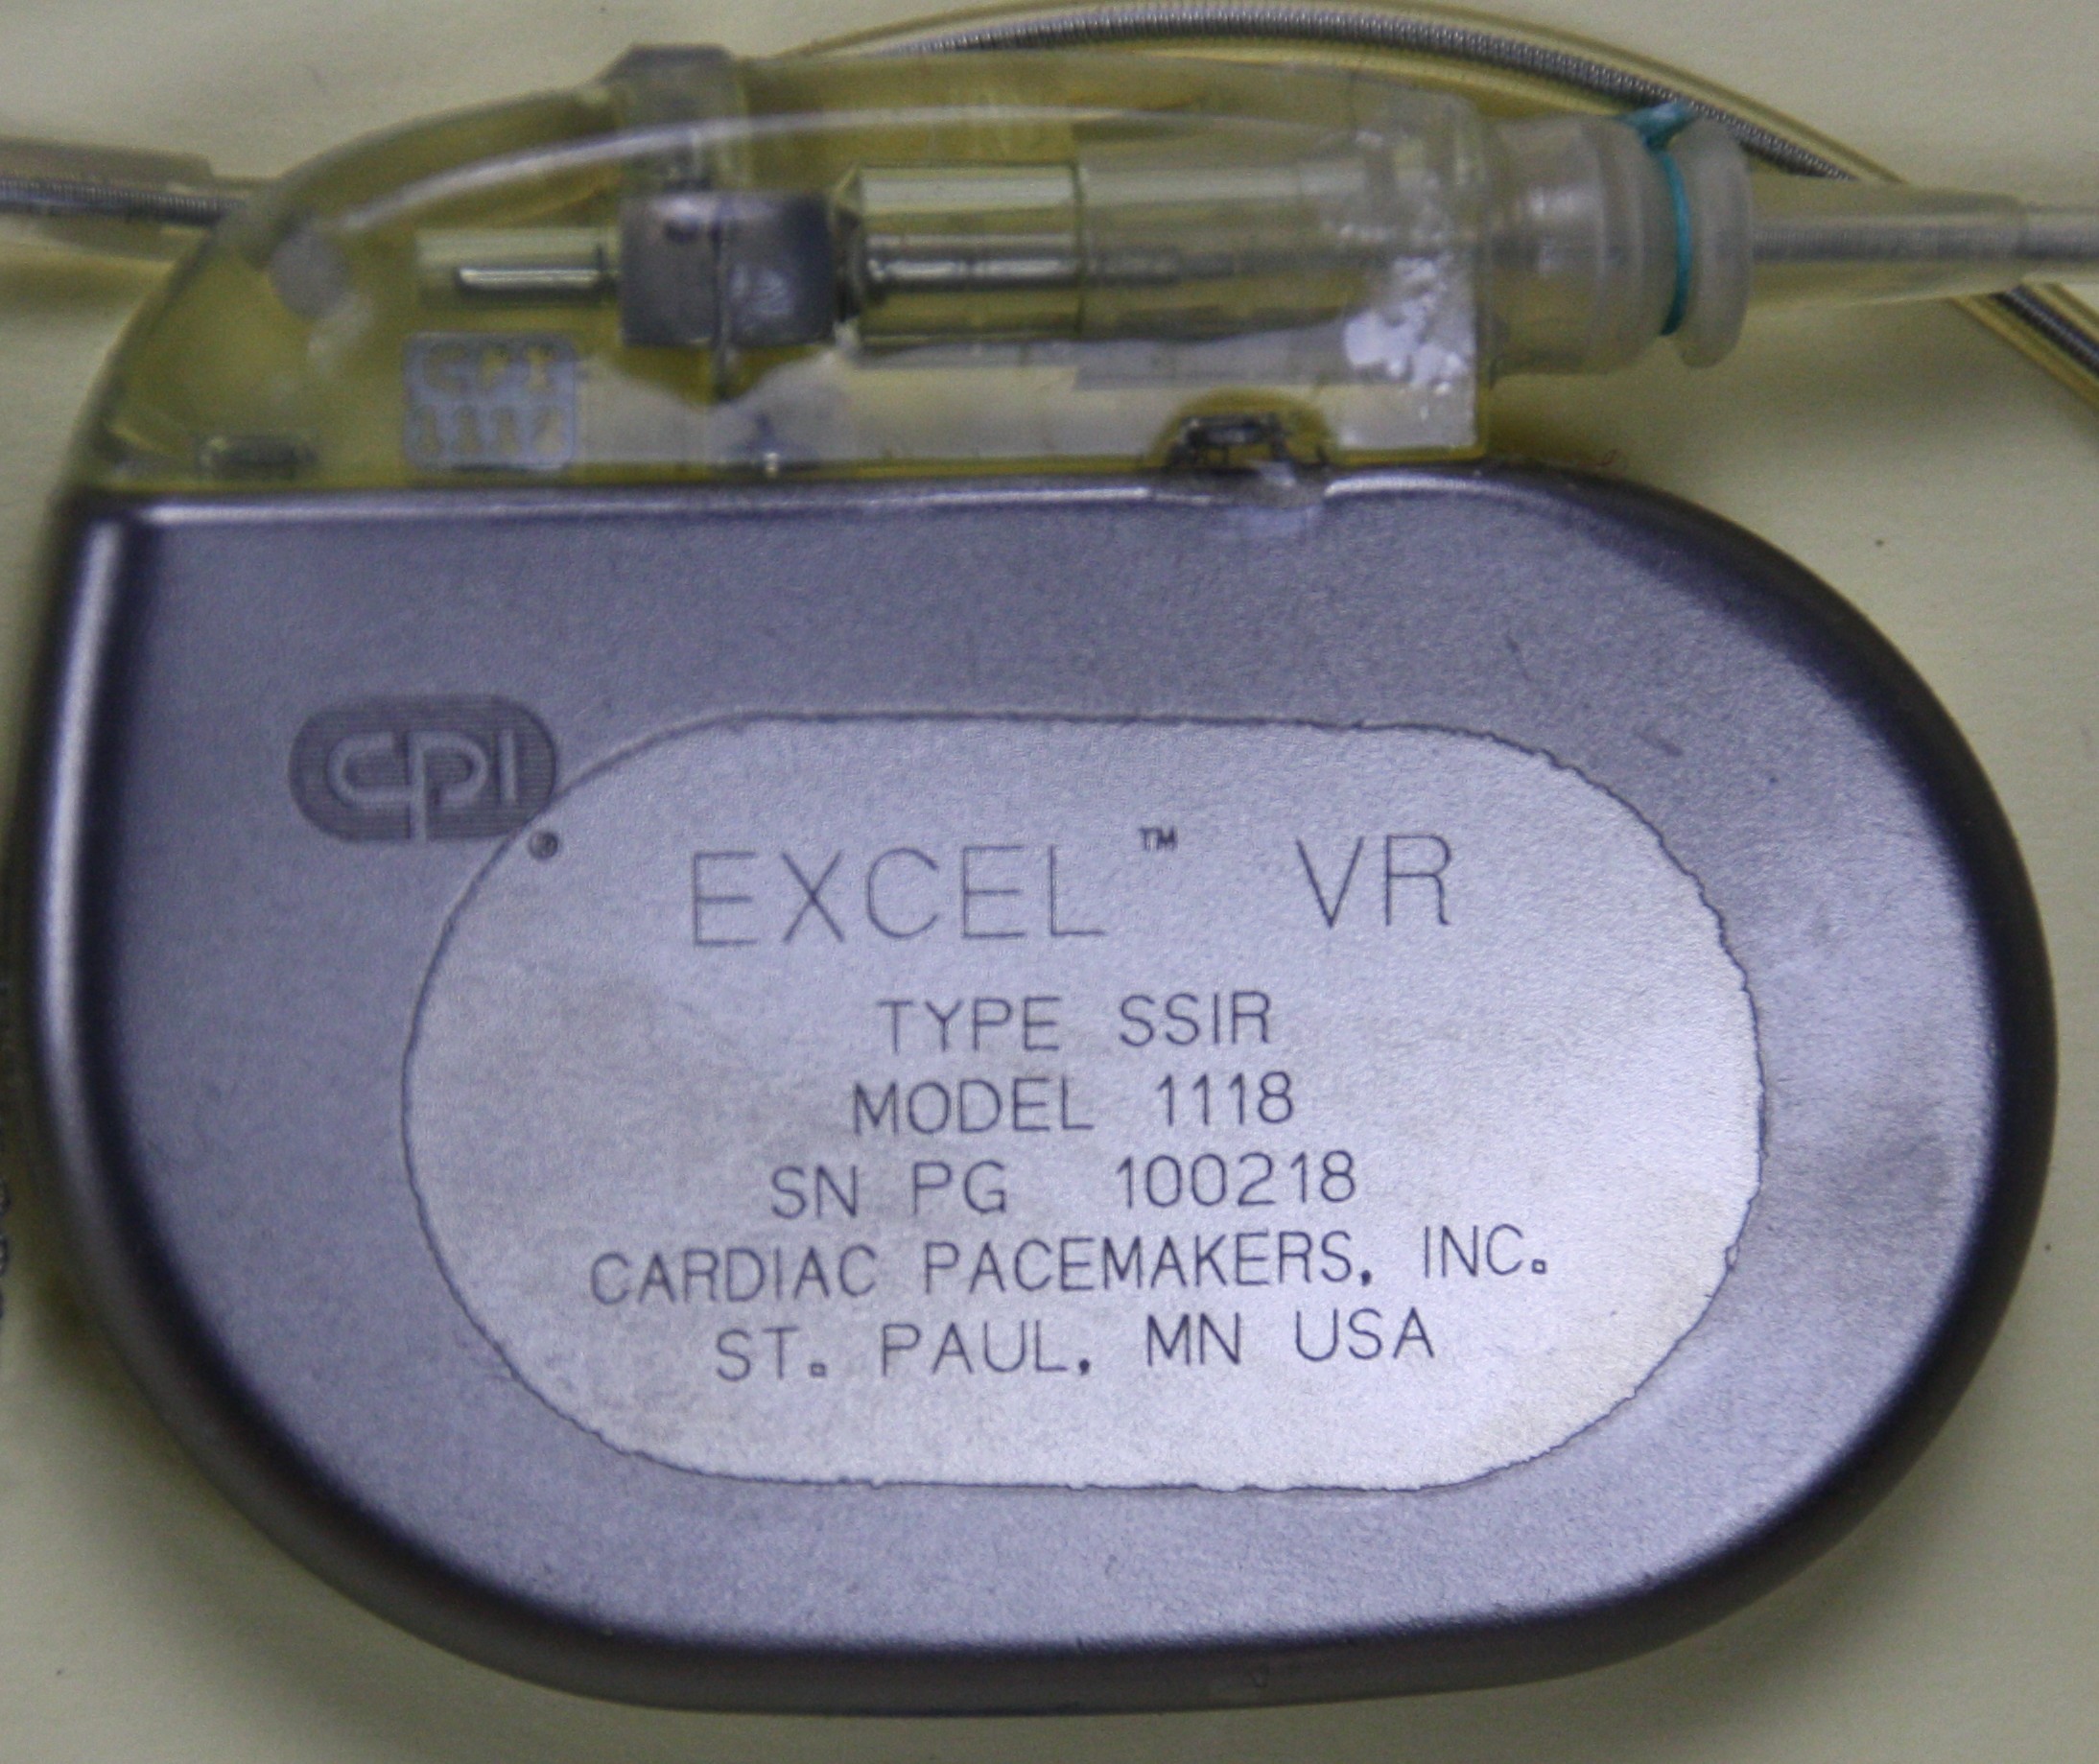 Herzschrittmacher-Implantat CPI Excel VR SSIR 1118 (Krankenhausmuseum Bielefeld e.V. CC BY-NC-SA)